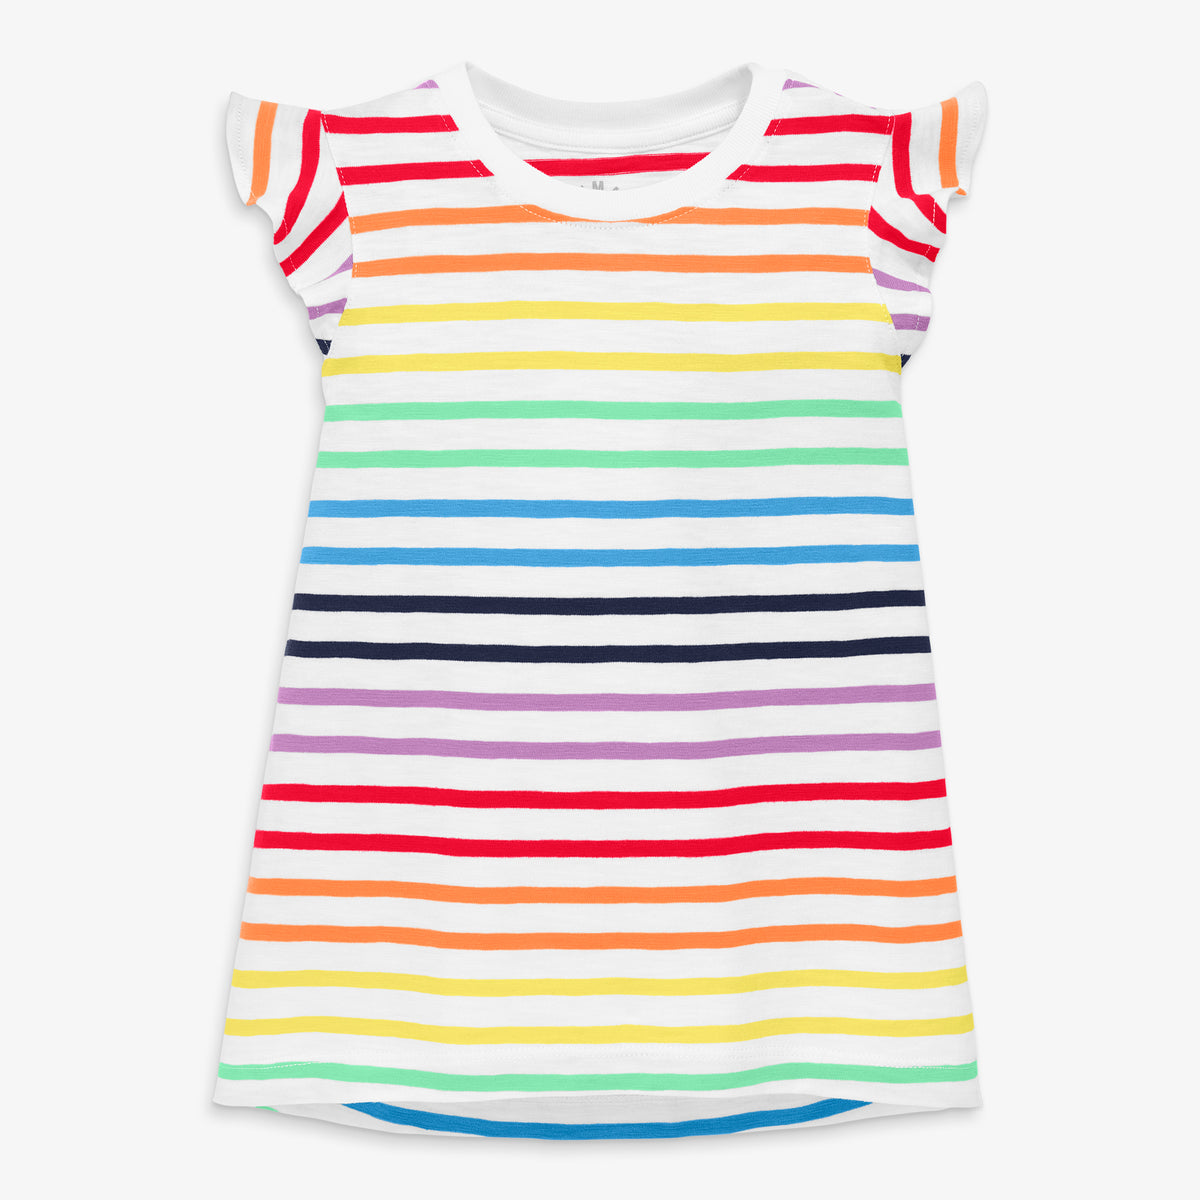 Flutter sleeve tee in double rainbow stripe | Primary.com